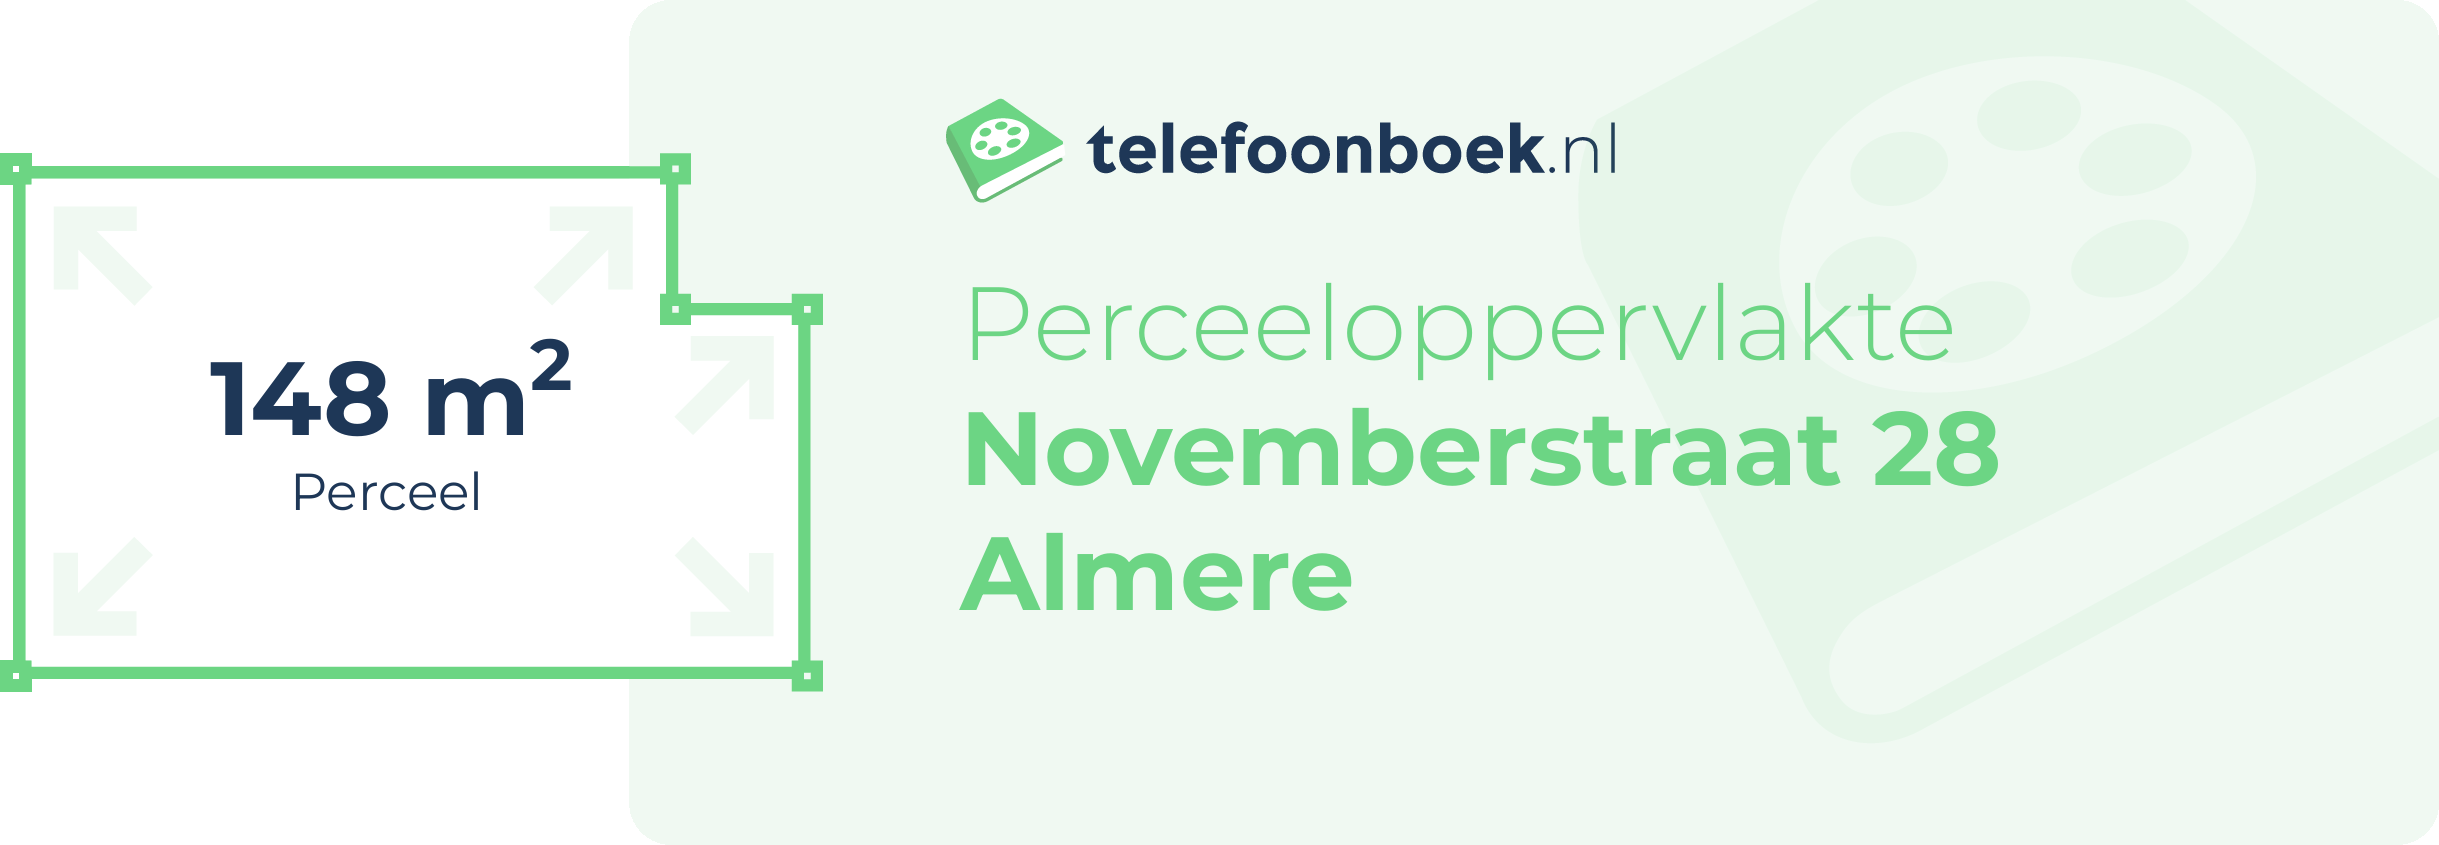 Perceeloppervlakte Novemberstraat 28 Almere